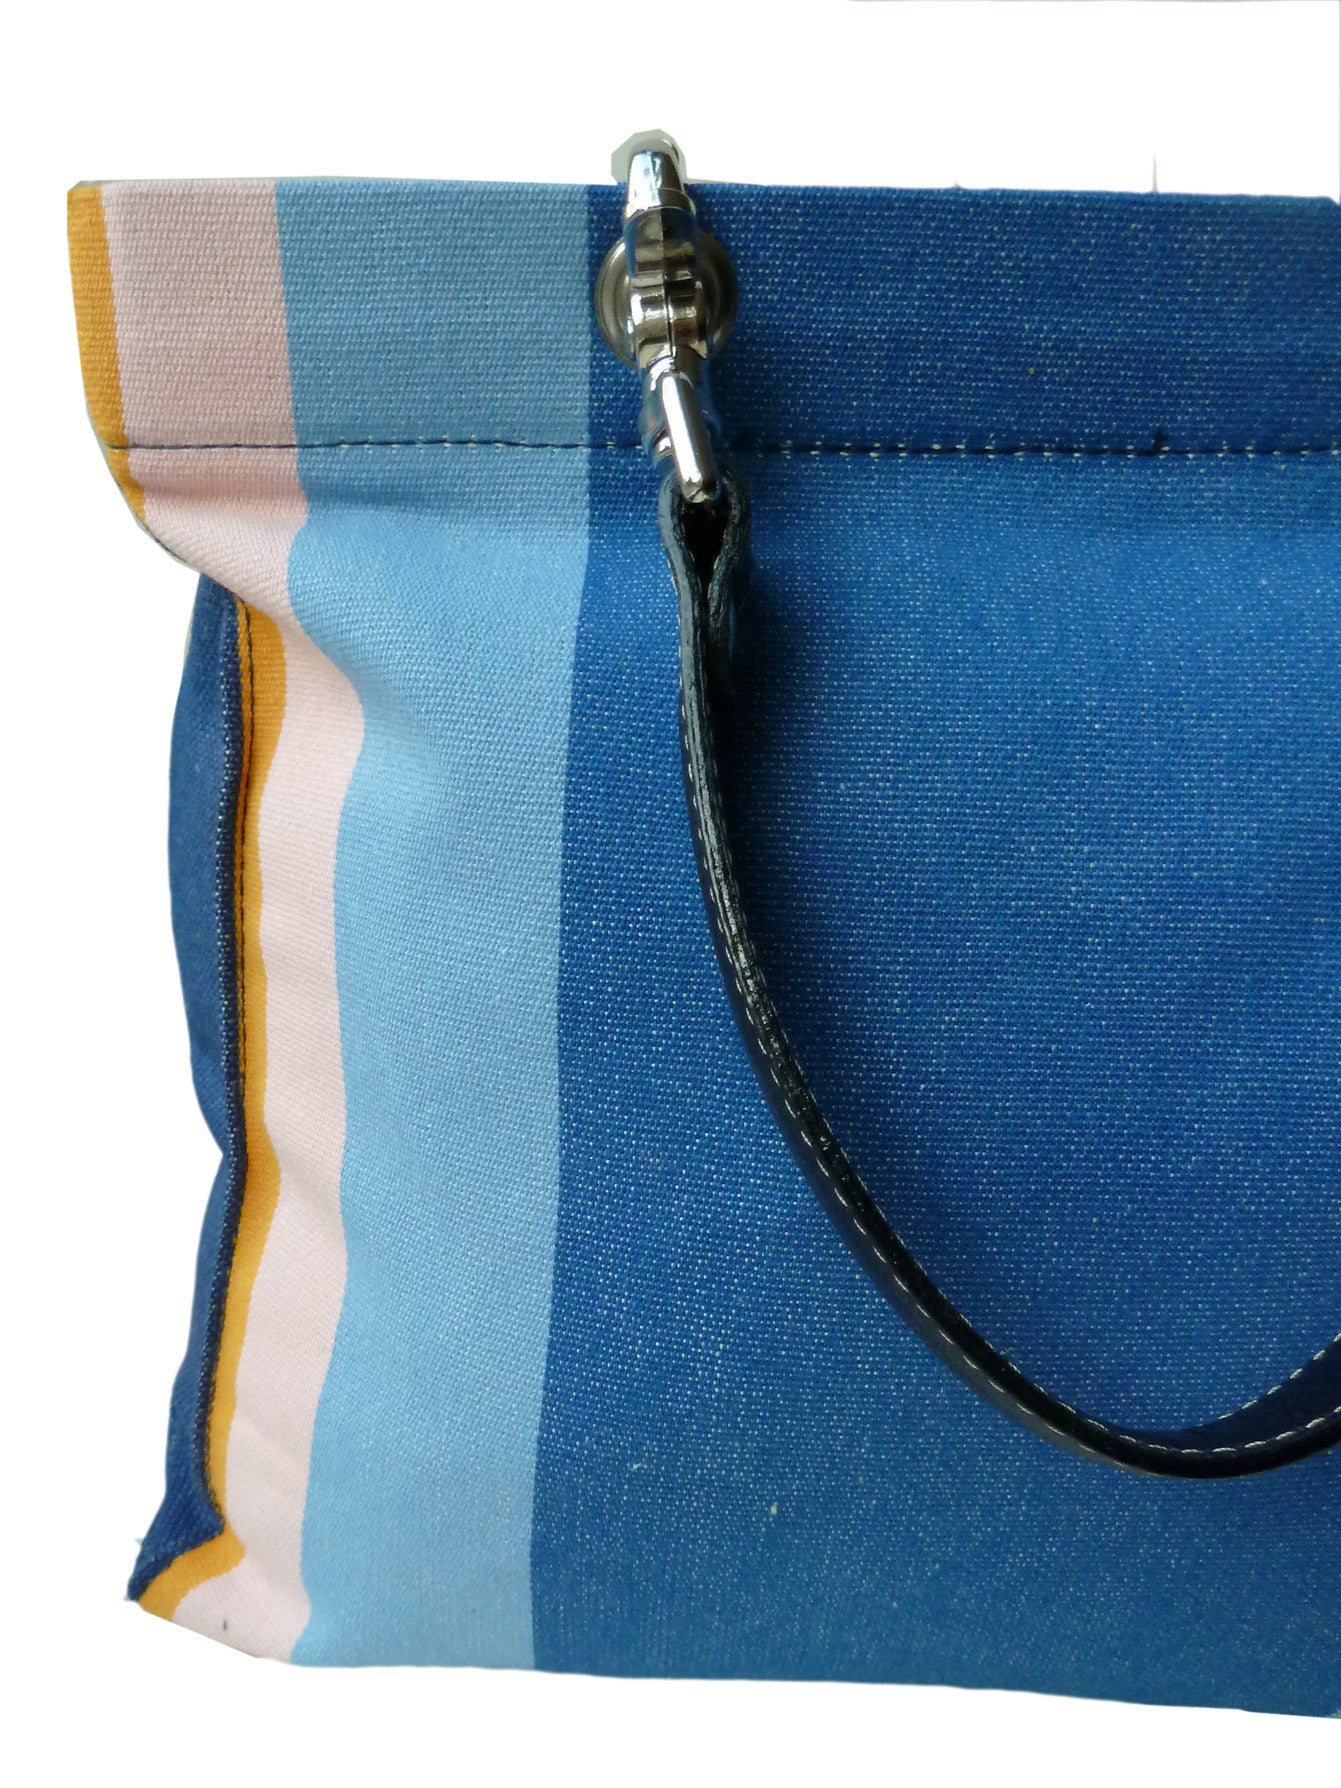 French Cotton Stripe Bags Blue Orange Color Block